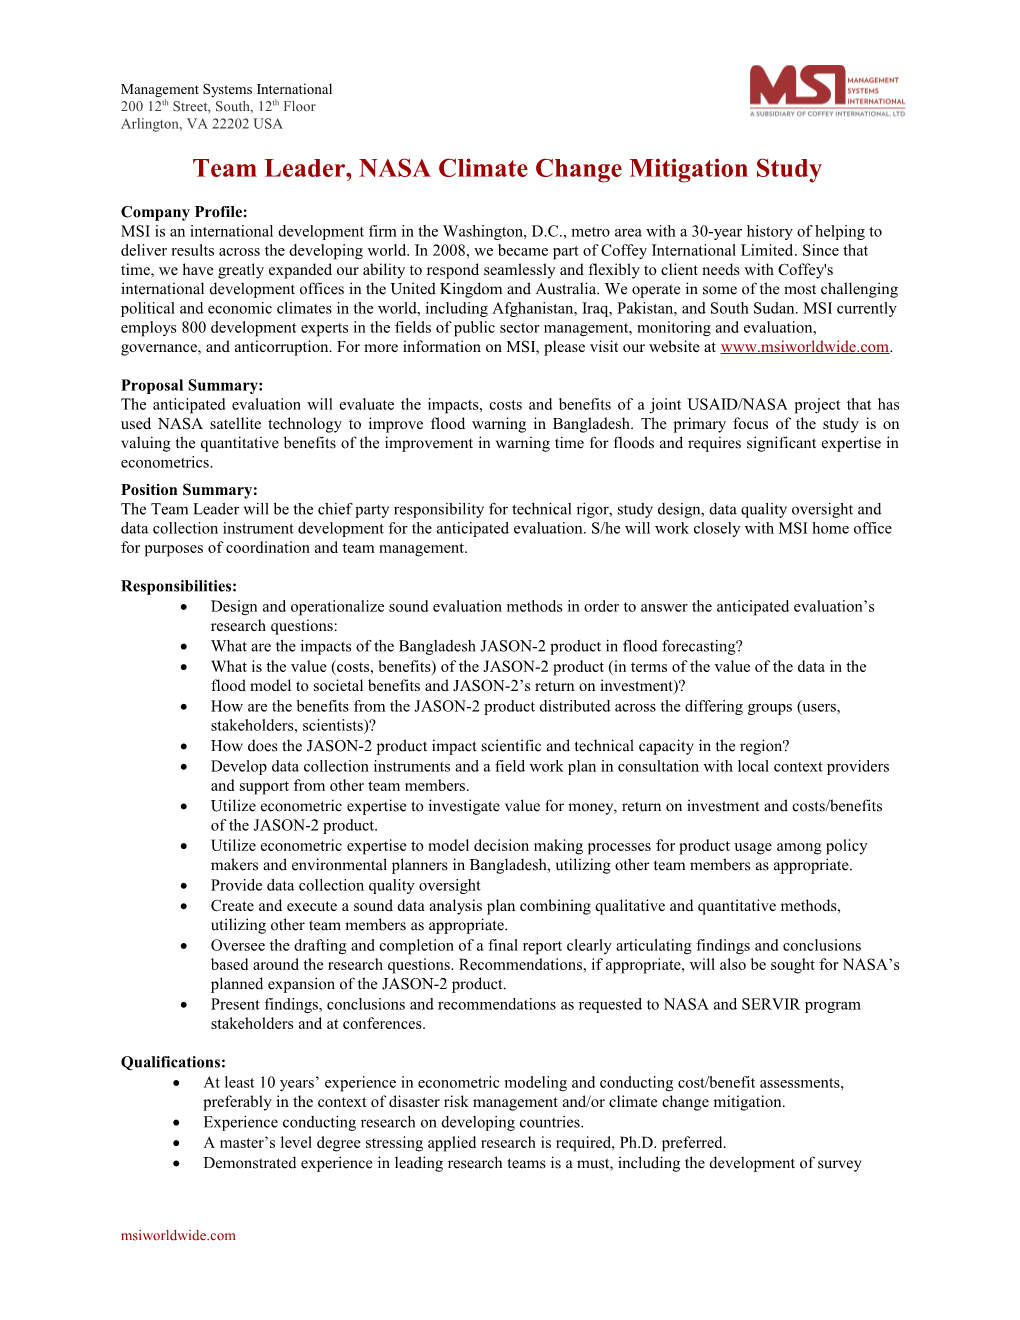 Team Leader, NASA Climate Change Mitigation Study